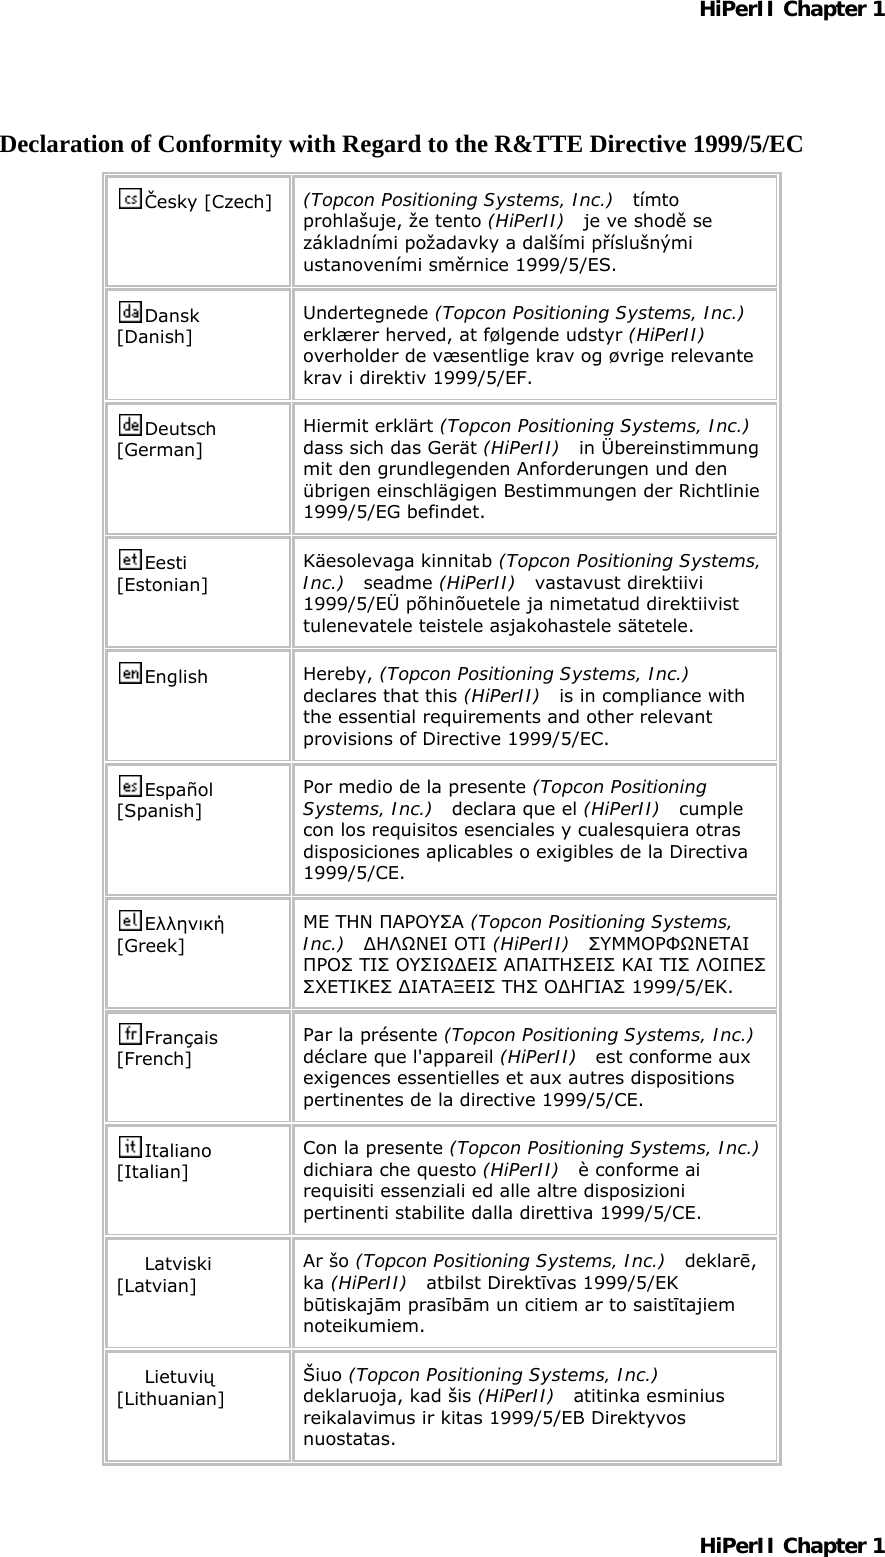 HiPerII Chapter 1 Declaration of Conformity with Regard to the R&amp;TTE Directive 1999/5/EC   Česky [Czech]  (Topcon Positioning Systems, Inc.)  tímto prohlašuje, že tento (HiPerII)   je ve shodě se základními požadavky a dalšími příslušnými ustanoveními směrnice 1999/5/ES. Dansk [Danish] Undertegnede (Topcon Positioning Systems, Inc.)  erklærer herved, at følgende udstyr (HiPerII) overholder de væsentlige krav og øvrige relevante krav i direktiv 1999/5/EF. Deutsch [German] Hiermit erklärt (Topcon Positioning Systems, Inc.)  dass sich das Gerät (HiPerII)  in Übereinstimmung mit den grundlegenden Anforderungen und den übrigen einschlägigen Bestimmungen der Richtlinie 1999/5/EG befindet. Eesti [Estonian] Käesolevaga kinnitab (Topcon Positioning Systems, Inc.)  seadme (HiPerII)  vastavust direktiivi 1999/5/EÜ põhinõuetele ja nimetatud direktiivist tulenevatele teistele asjakohastele sätetele. English  Hereby, (Topcon Positioning Systems, Inc.)  declares that this (HiPerII)   is in compliance with the essential requirements and other relevant provisions of Directive 1999/5/EC. Español [Spanish] Por medio de la presente (Topcon Positioning Systems, Inc.)  declara que el (HiPerII)  cumple con los requisitos esenciales y cualesquiera otras disposiciones aplicables o exigibles de la Directiva 1999/5/CE. Ελληνική [Greek] ΜΕ ΤΗΝ ΠΑΡΟΥΣΑ (Topcon Positioning Systems, Inc.)  ΔΗΛΩΝΕΙ ΟΤΙ (HiPerII)  ΣΥΜΜΟΡΦΩΝΕΤΑΙ ΠΡΟΣ ΤΙΣ ΟΥΣΙΩΔΕΙΣ ΑΠΑΙΤΗΣΕΙΣ ΚΑΙ ΤΙΣ ΛΟΙΠΕΣ ΣΧΕΤΙΚΕΣ ΔΙΑΤΑΞΕΙΣ ΤΗΣ ΟΔΗΓΙΑΣ 1999/5/ΕΚ. Français [French] Par la présente (Topcon Positioning Systems, Inc.)  déclare que l&apos;appareil (HiPerII)  est conforme aux exigences essentielles et aux autres dispositions pertinentes de la directive 1999/5/CE. Con la presente (Topcon Positioning Systems, Inc.)  dichiara che questo (HiPerII)  è conforme ai requisiti essenziali ed alle altre disposizioni pertinenti stabilite dalla direttiva 1999/5/CE. Italiano [Italian] Ar šo (Topcon Positioning Systems, Inc.)  deklarē, ka (HiPerII)  atbilst Direktīvas 1999/5/EK būtiskajām prasībām un citiem ar to saistītajiem noteikumiem. Latviski [Latvian] Šiuo (Topcon Positioning Systems, Inc.)  deklaruoja, kad šis (HiPerII)  atitinka esminius reikalavimus ir kitas 1999/5/EB Direktyvos nuostatas. Lietuvių [Lithuanian]  HiPerII Chapter 1 